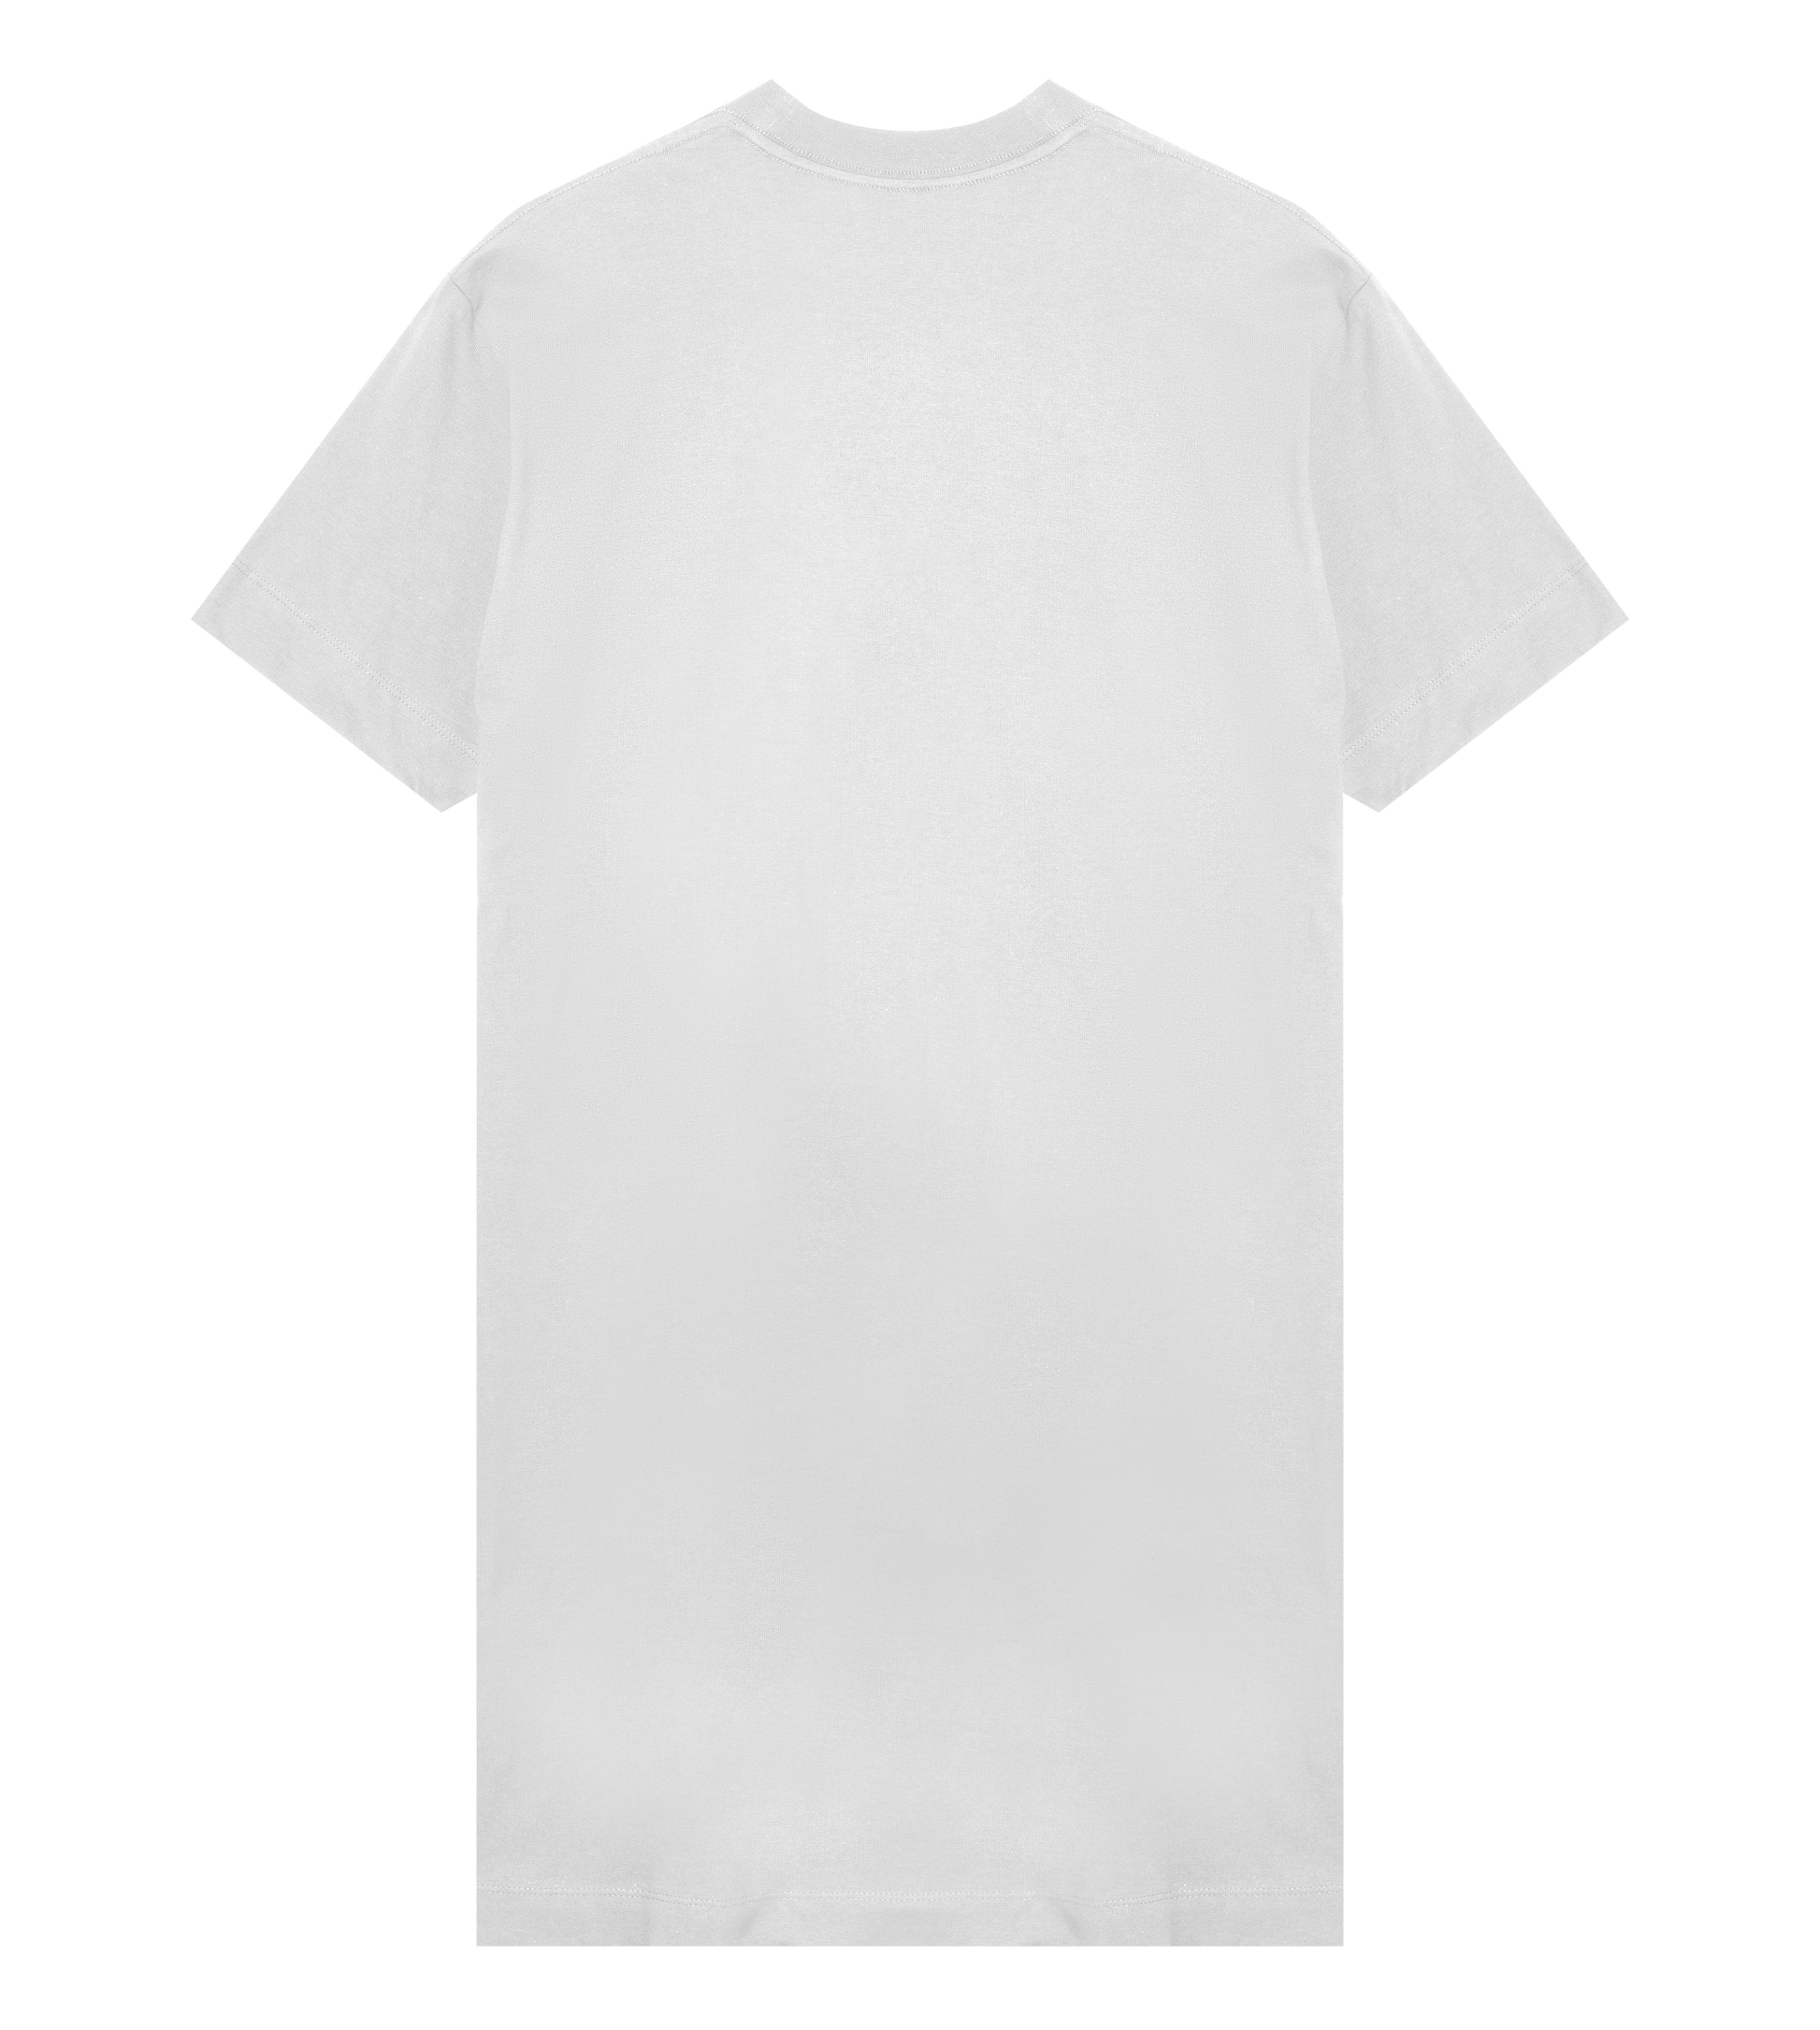 Archangel Gabriel Womens T-shirt Dress V.2